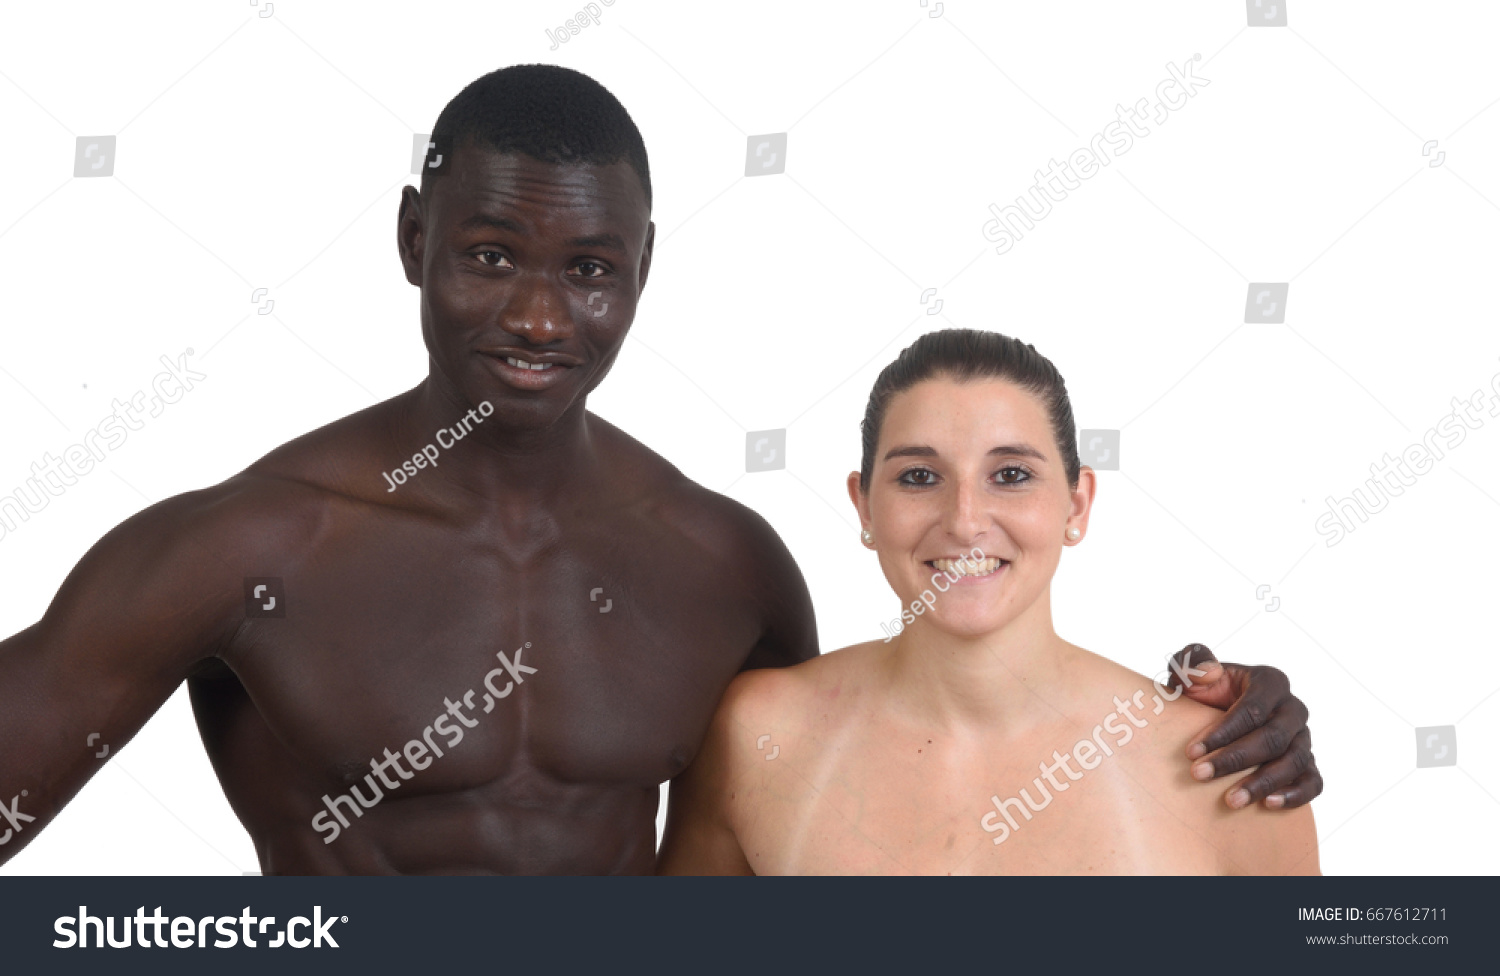 Nudist Couples